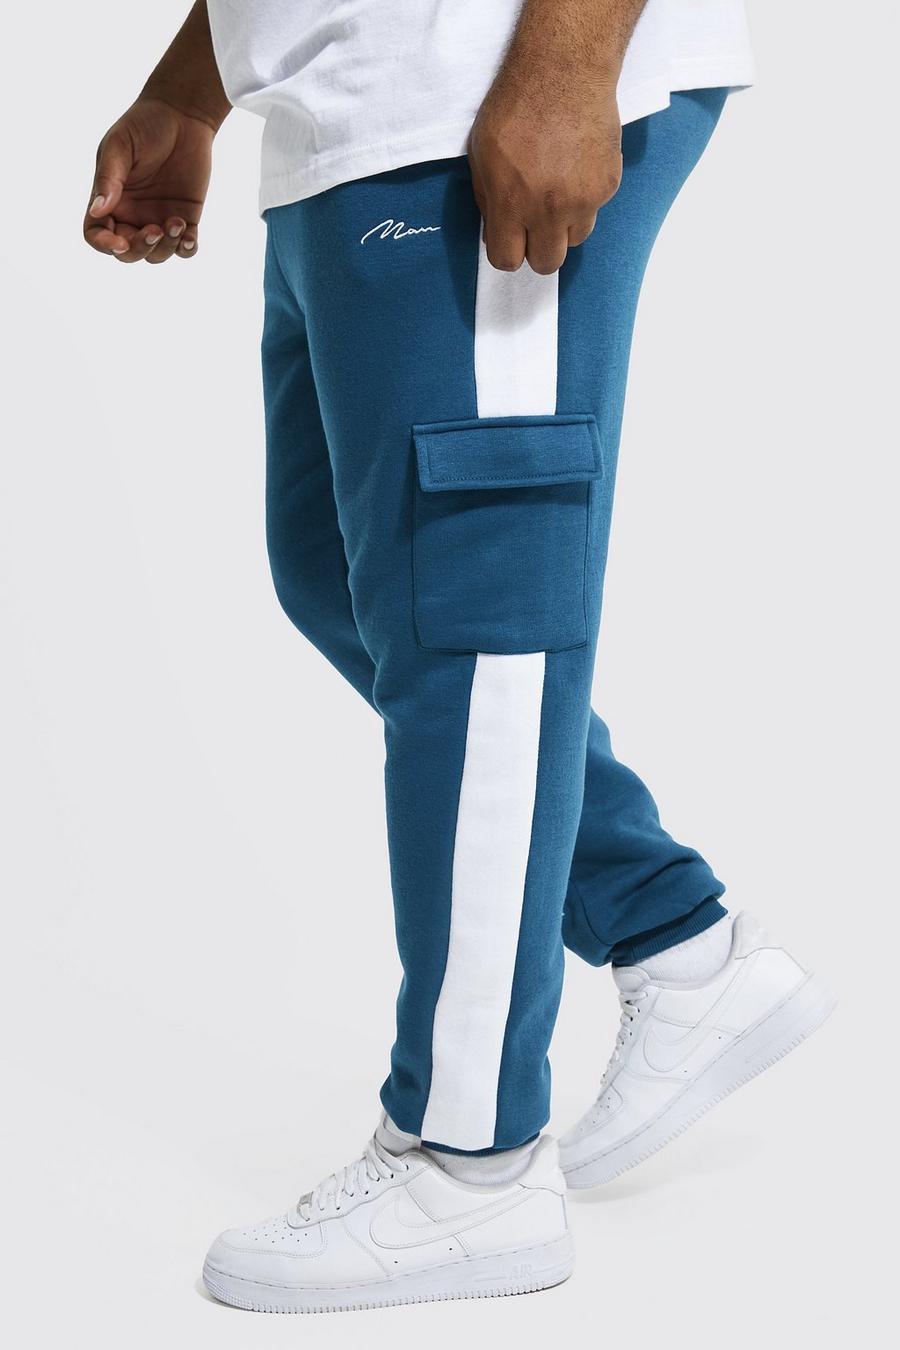 Pantaloni tuta Plus Size stile Cargo Skinny Fit con scritta Man, Blue azul